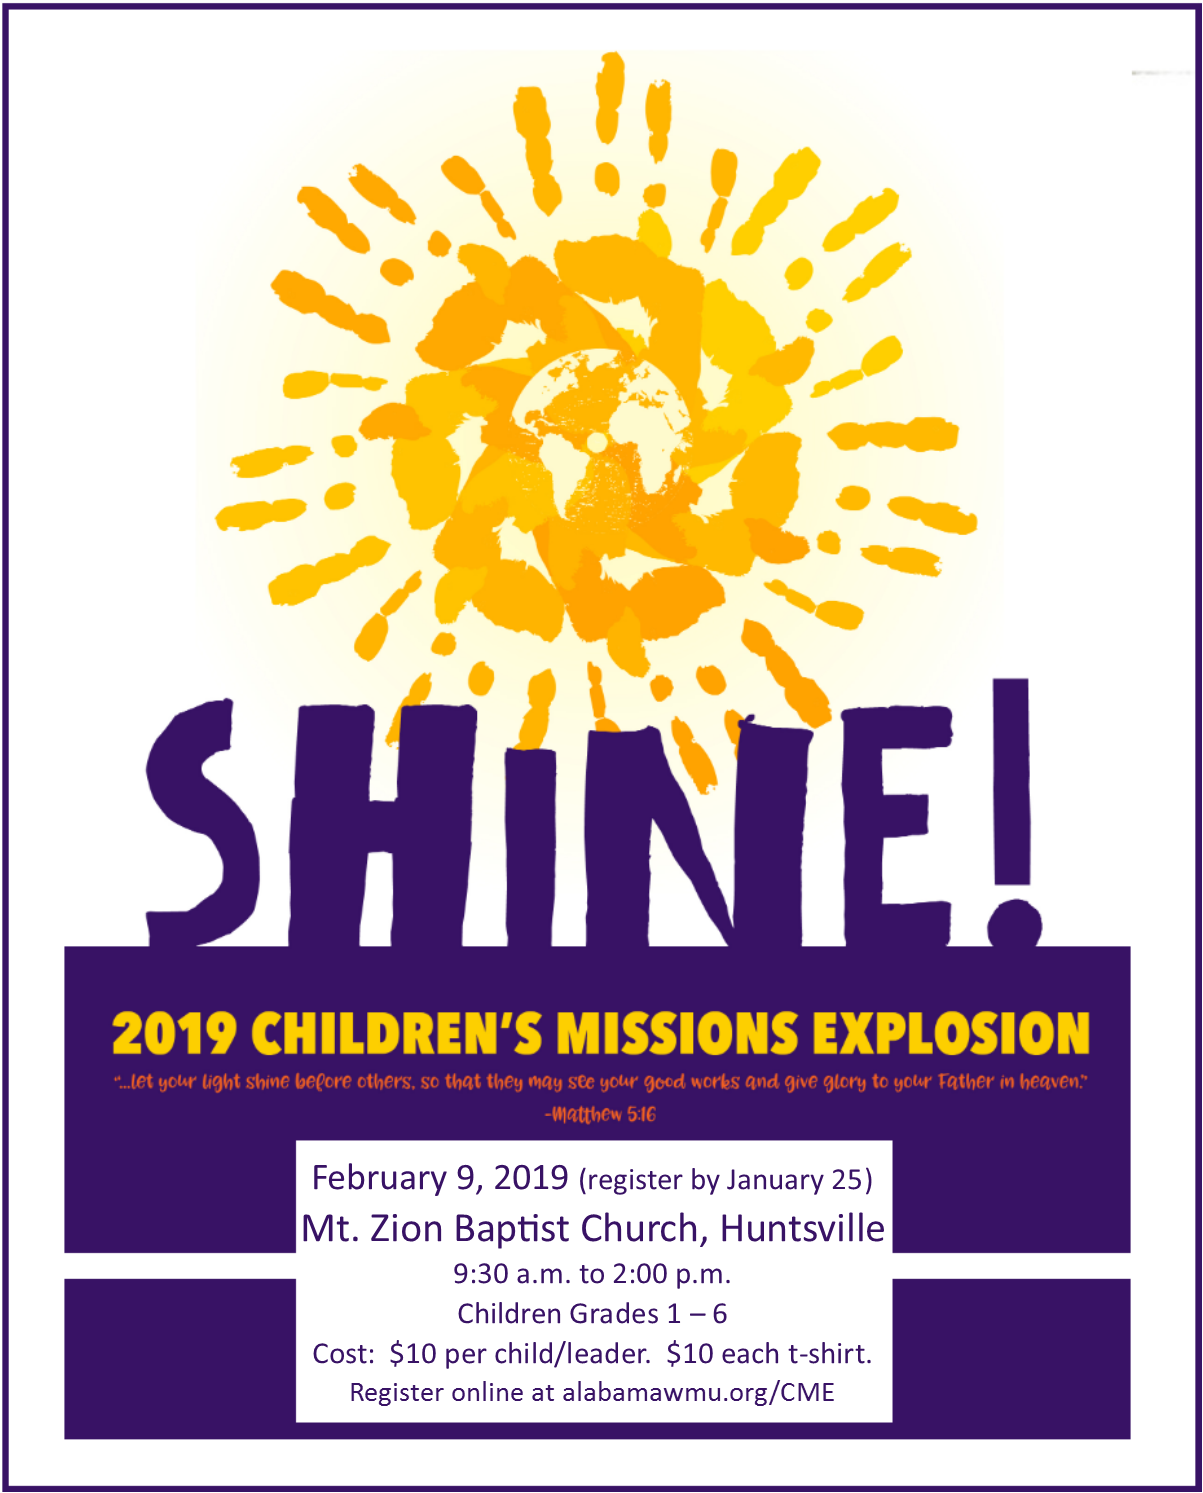 SHINE! 2019 Children's Mission Explosion @ Mt. Zion Baptist Church